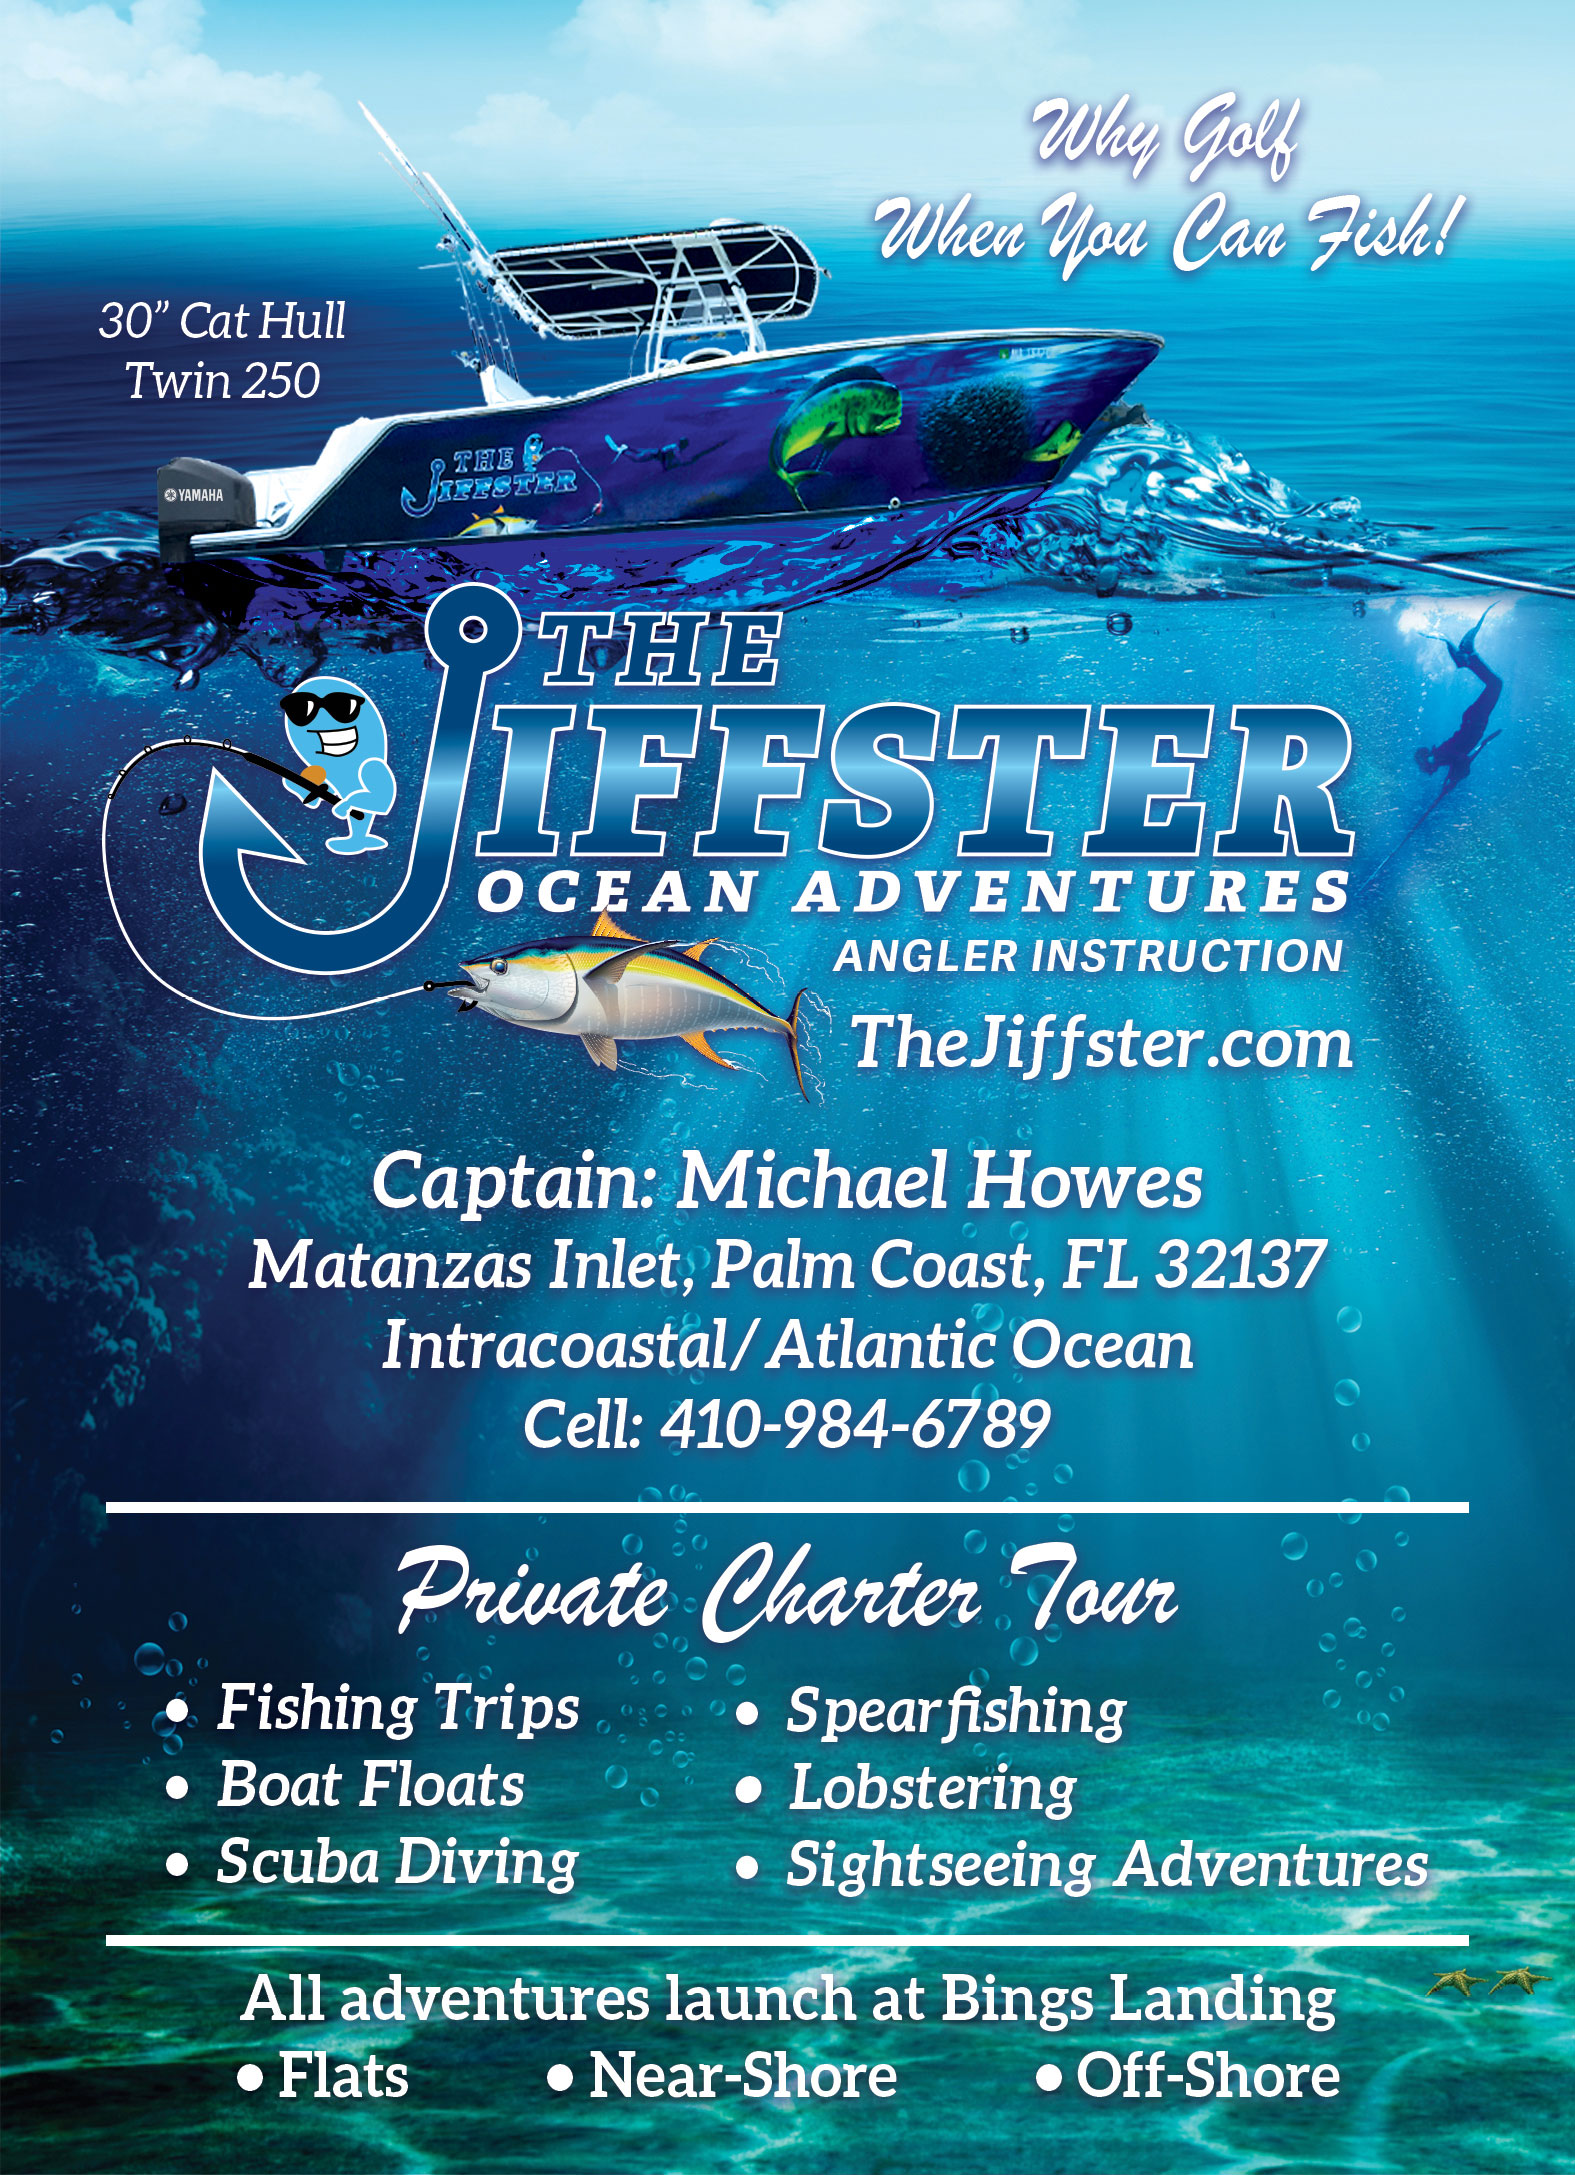 Jiffster Ocean Adventure: Palm Coast, Florida. Intracoastal/Atlantic Ocean. Captain Michael Howes